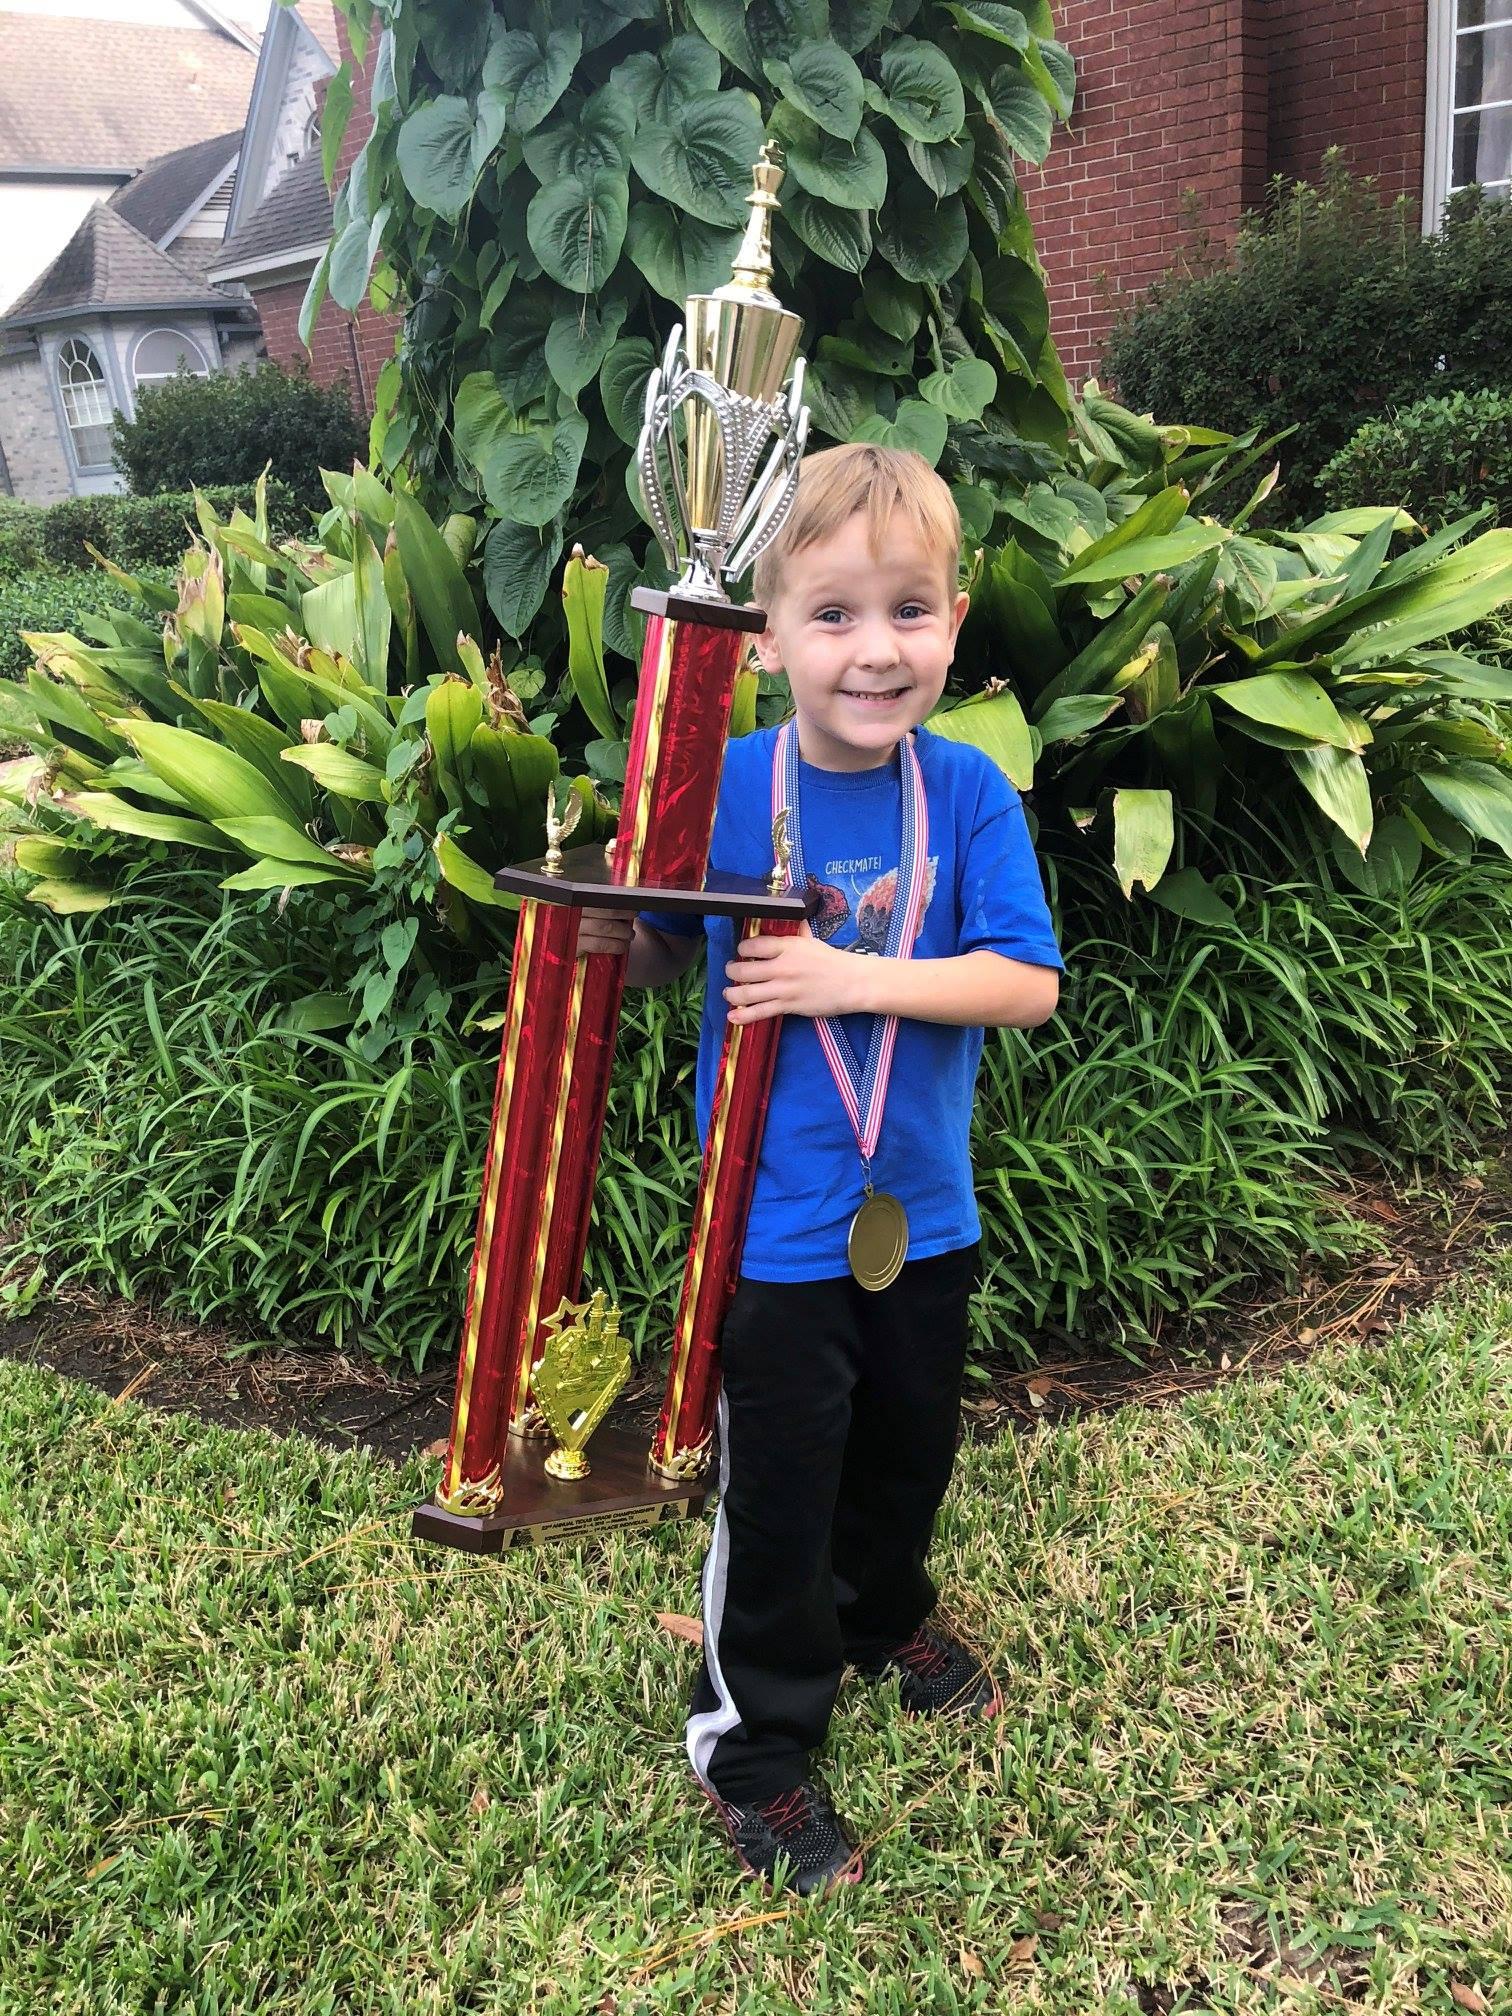 Meet Ryan Mecham, the 7-year-old Houston chess prodigy